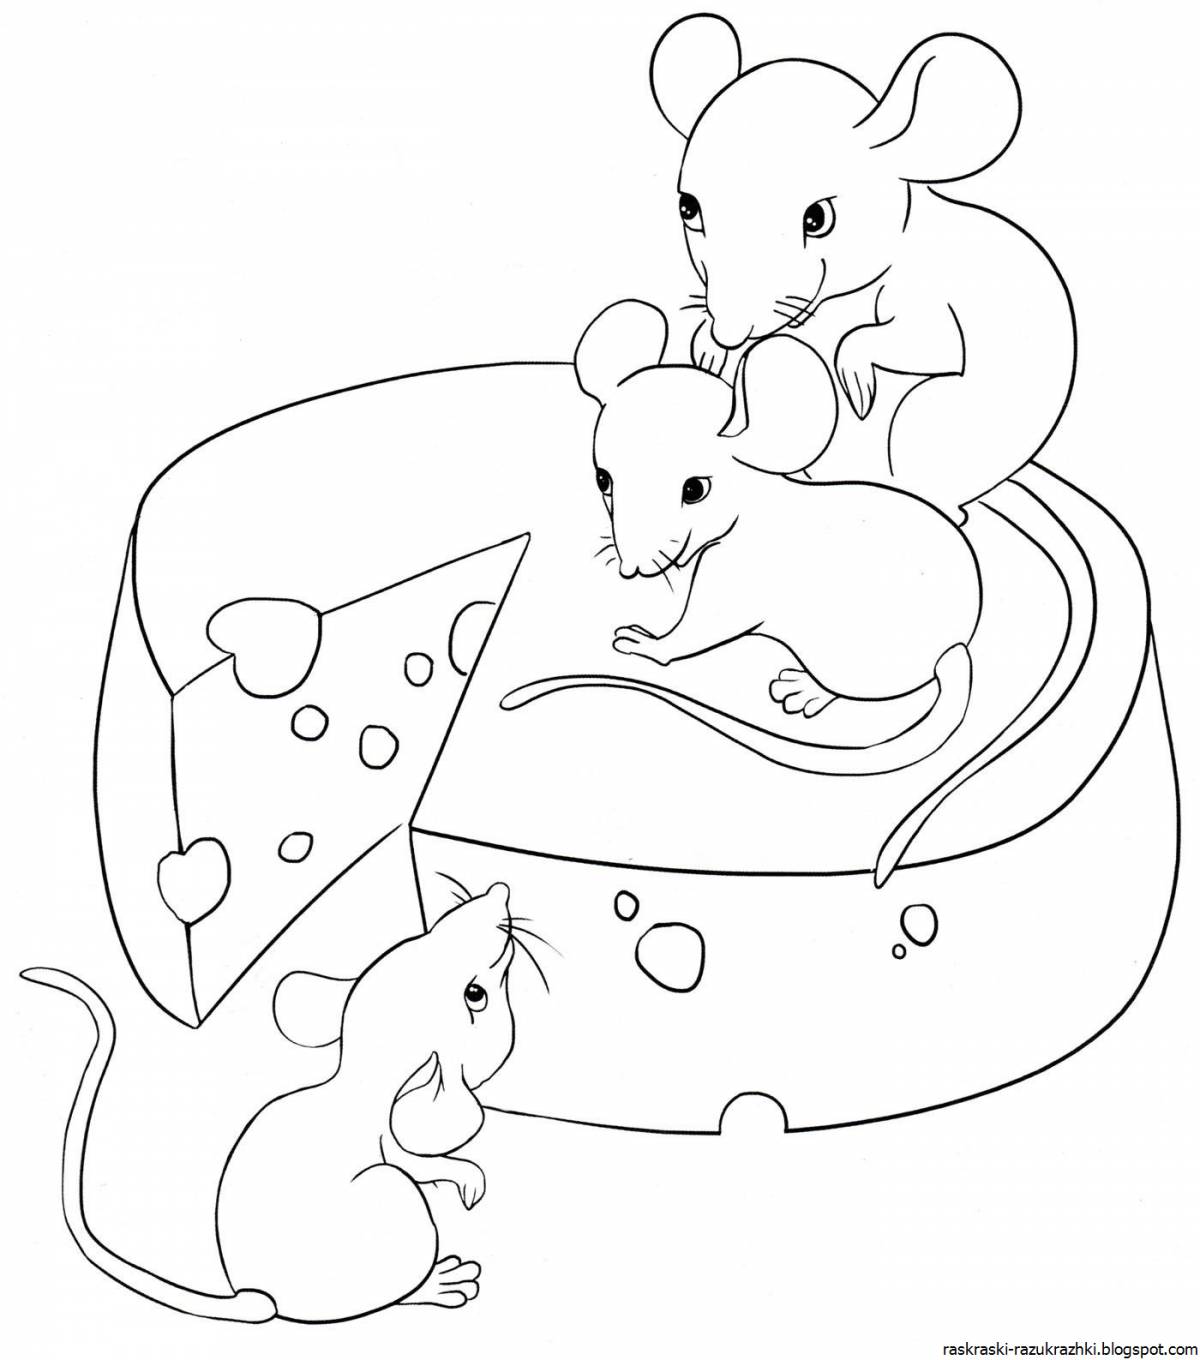 Cute little mouse coloring book